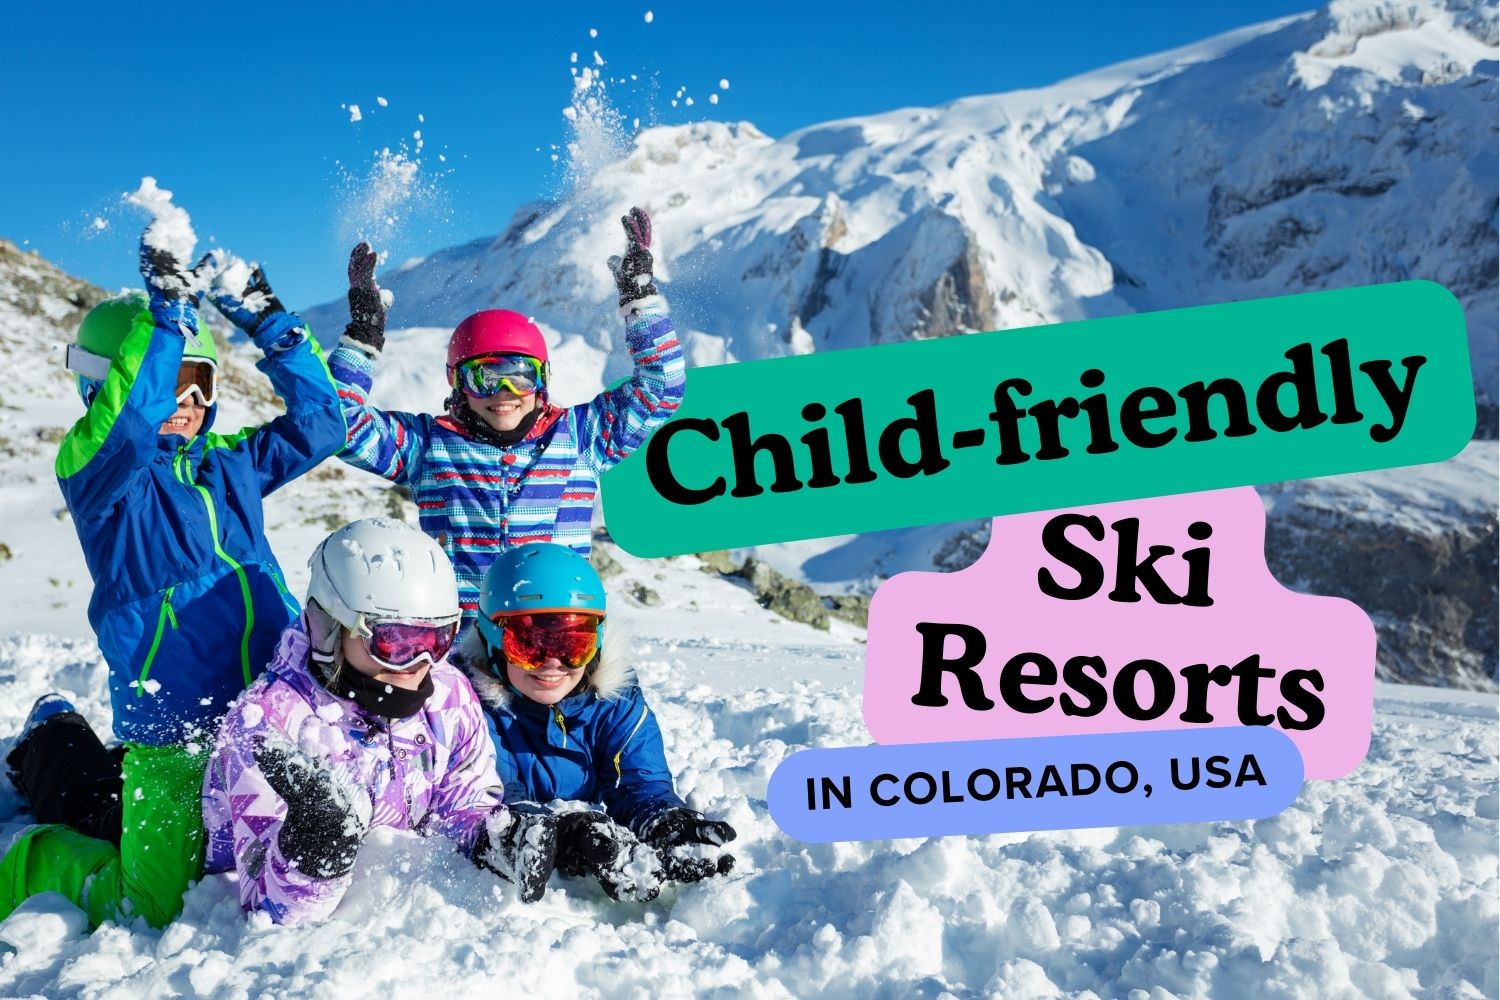 Colorado Ski Resorts that offer Childcare